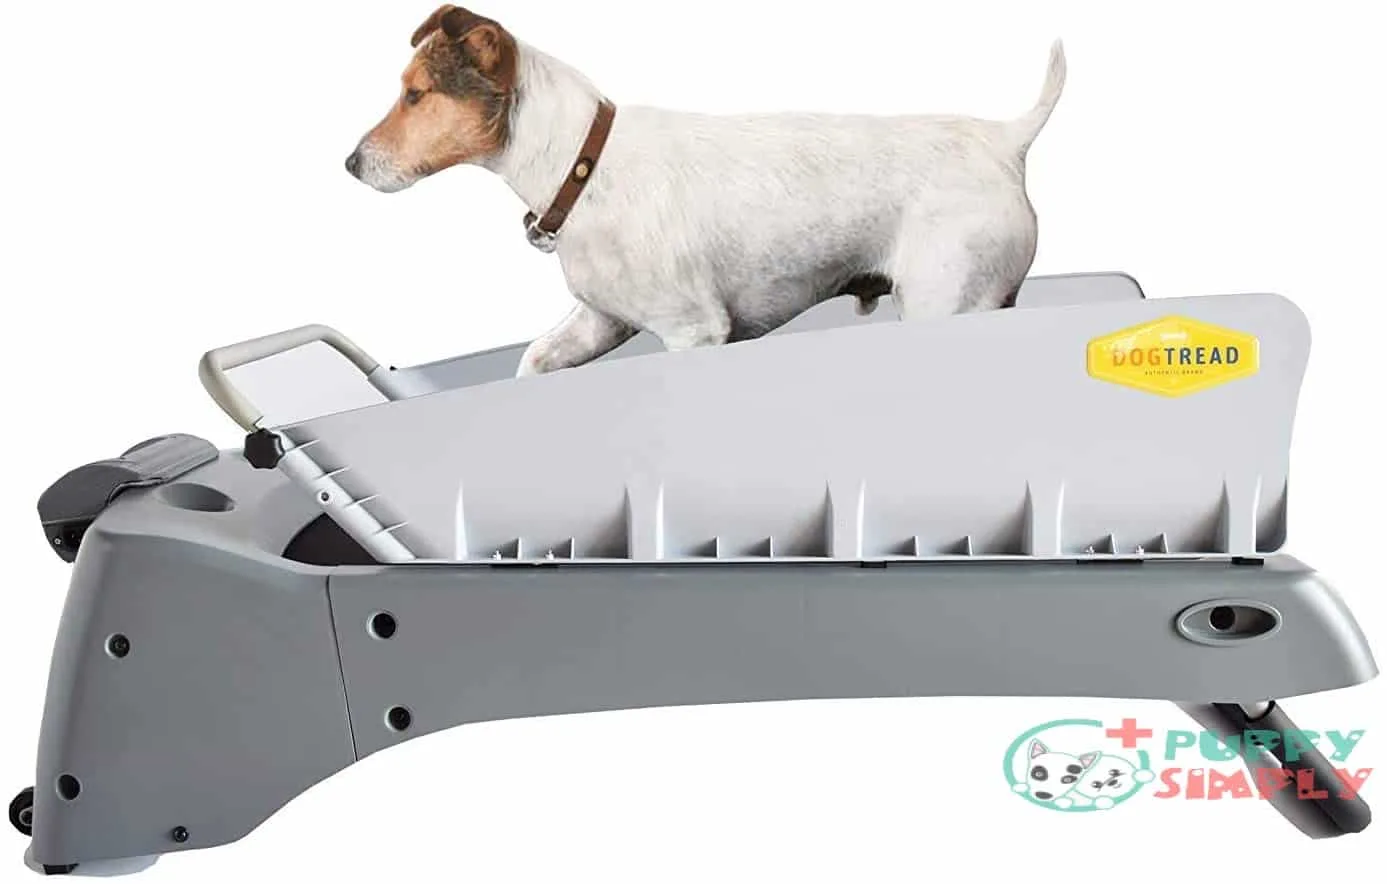 DogTread Premium Small Dog Treadmill B001M7U92Y